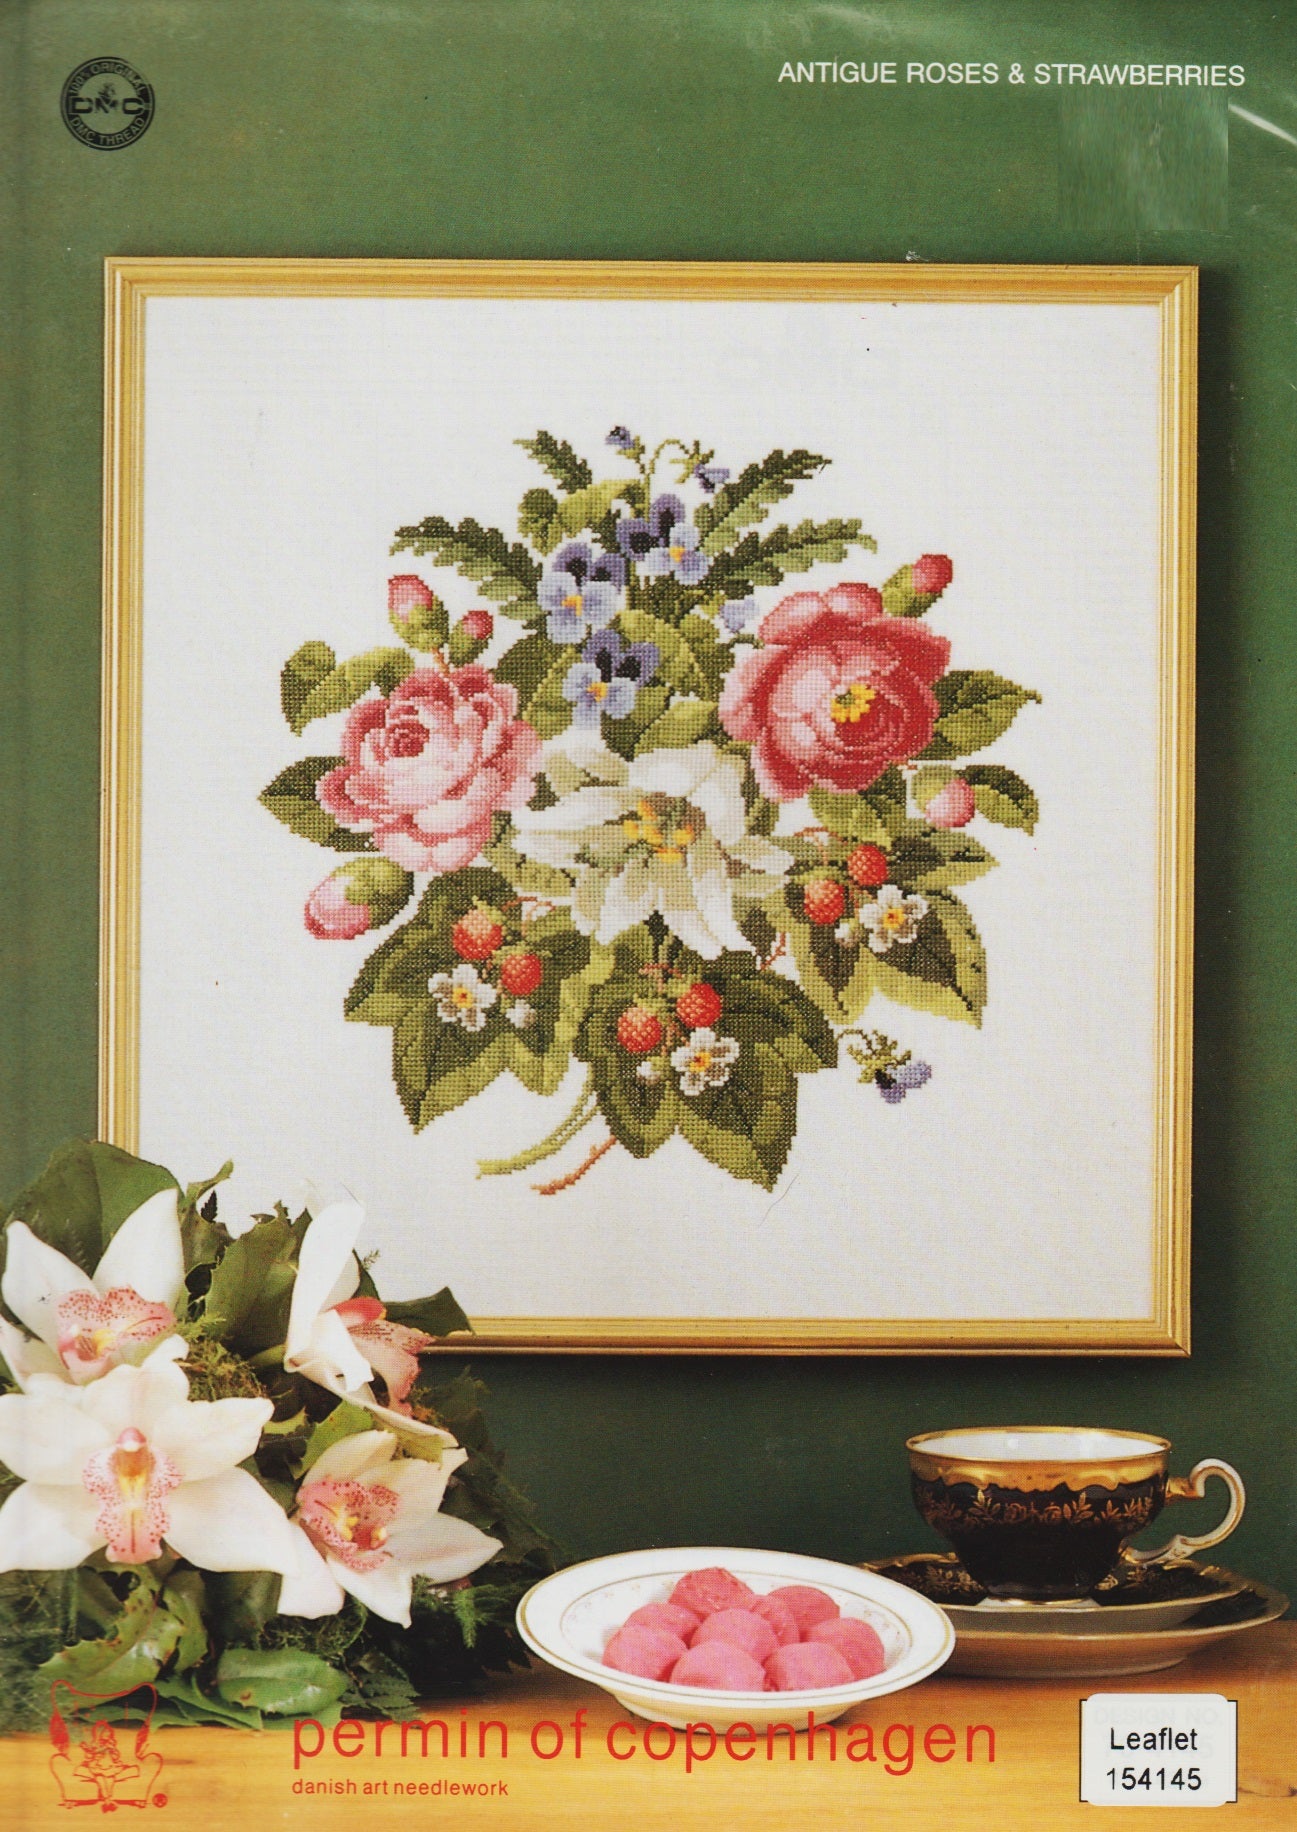 Permin of Copenhagen Antique Roses & Strawberries 154145 cross stitch pattern